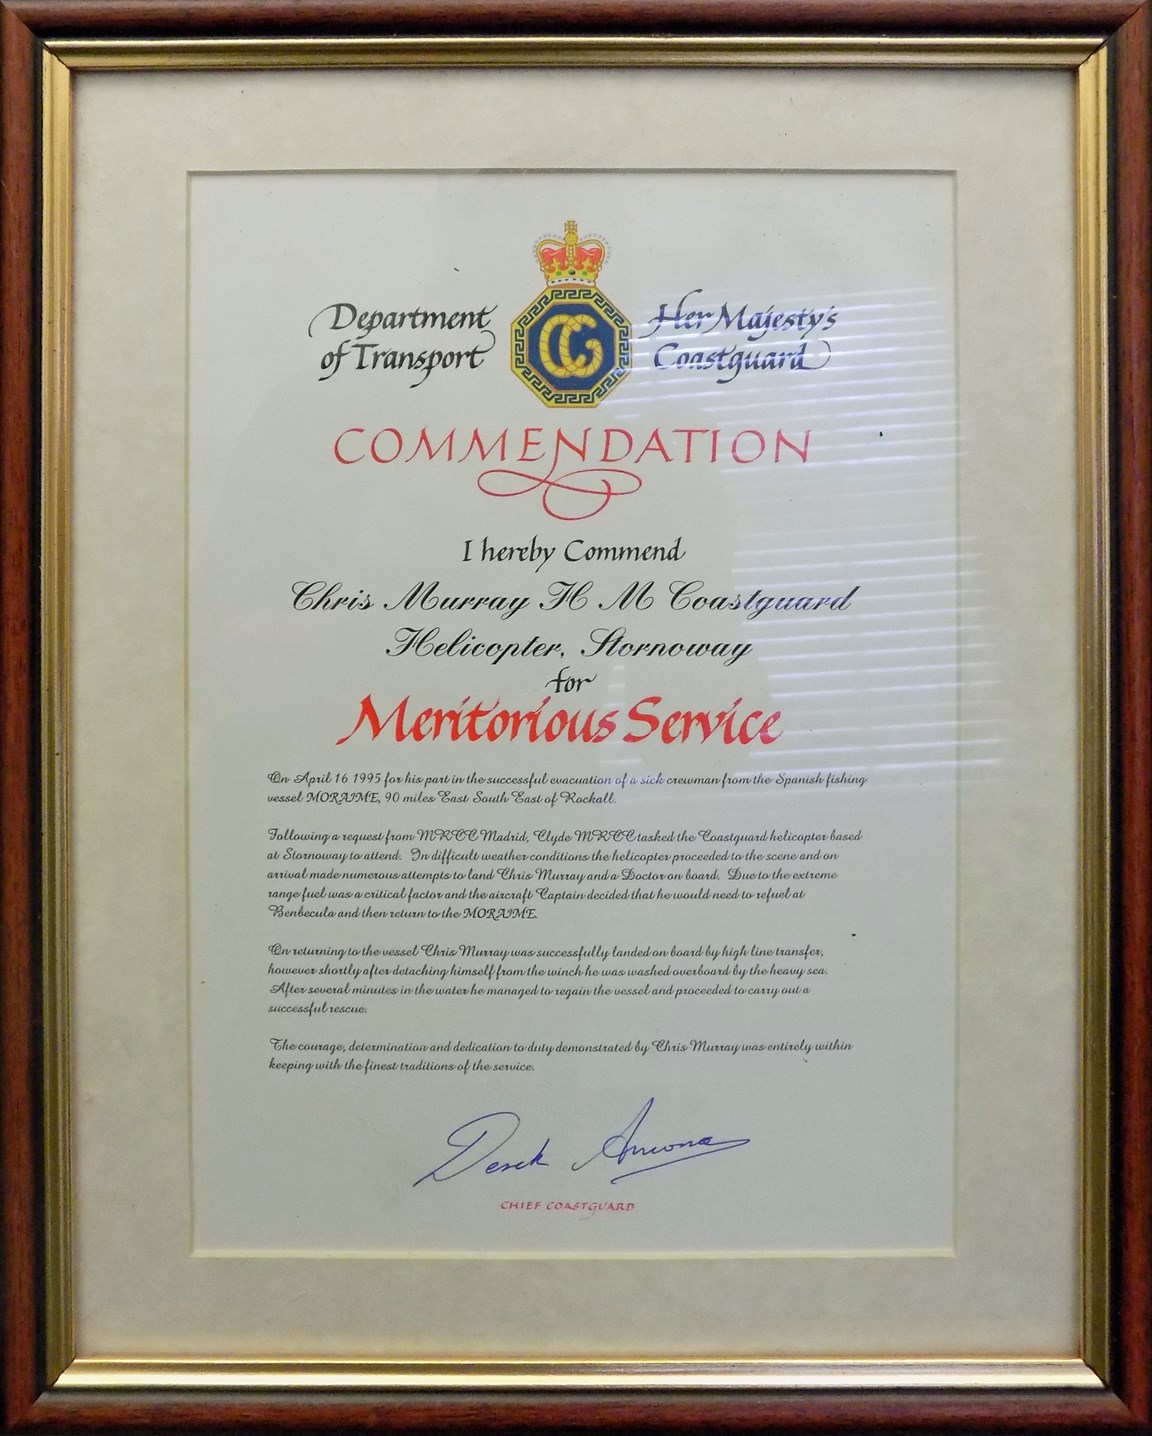 Her Majesty’s Coastguard Commendation awarded to WM Chris Murray